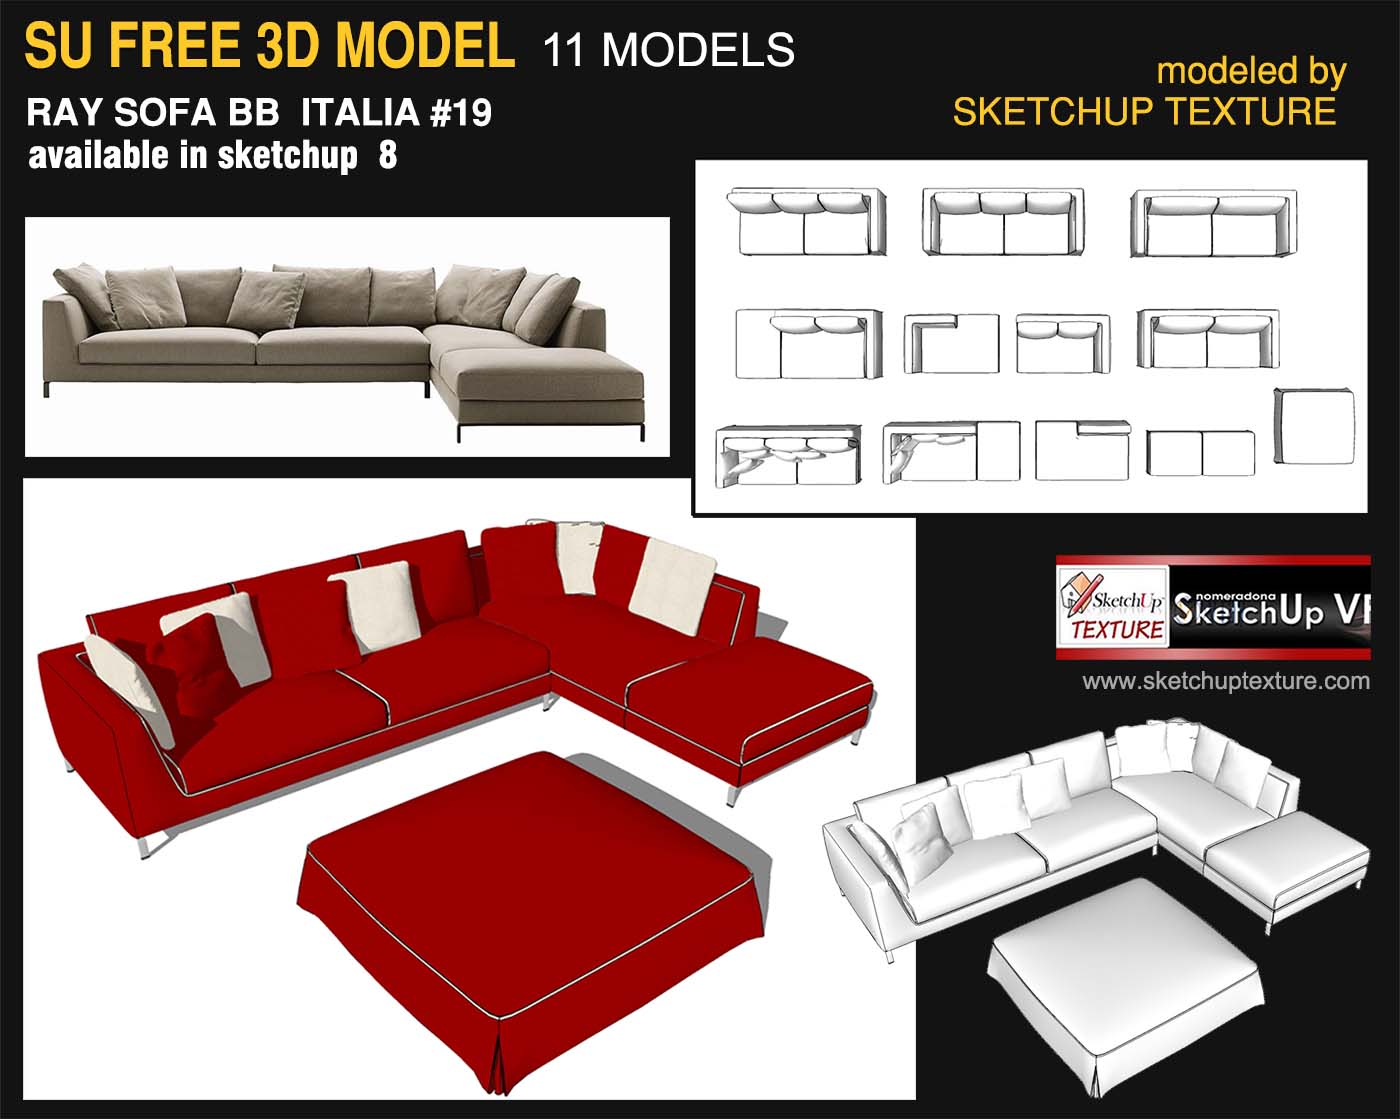 free Sketchup 3d model Ray Sofa BB Italia by skethuptexture.com